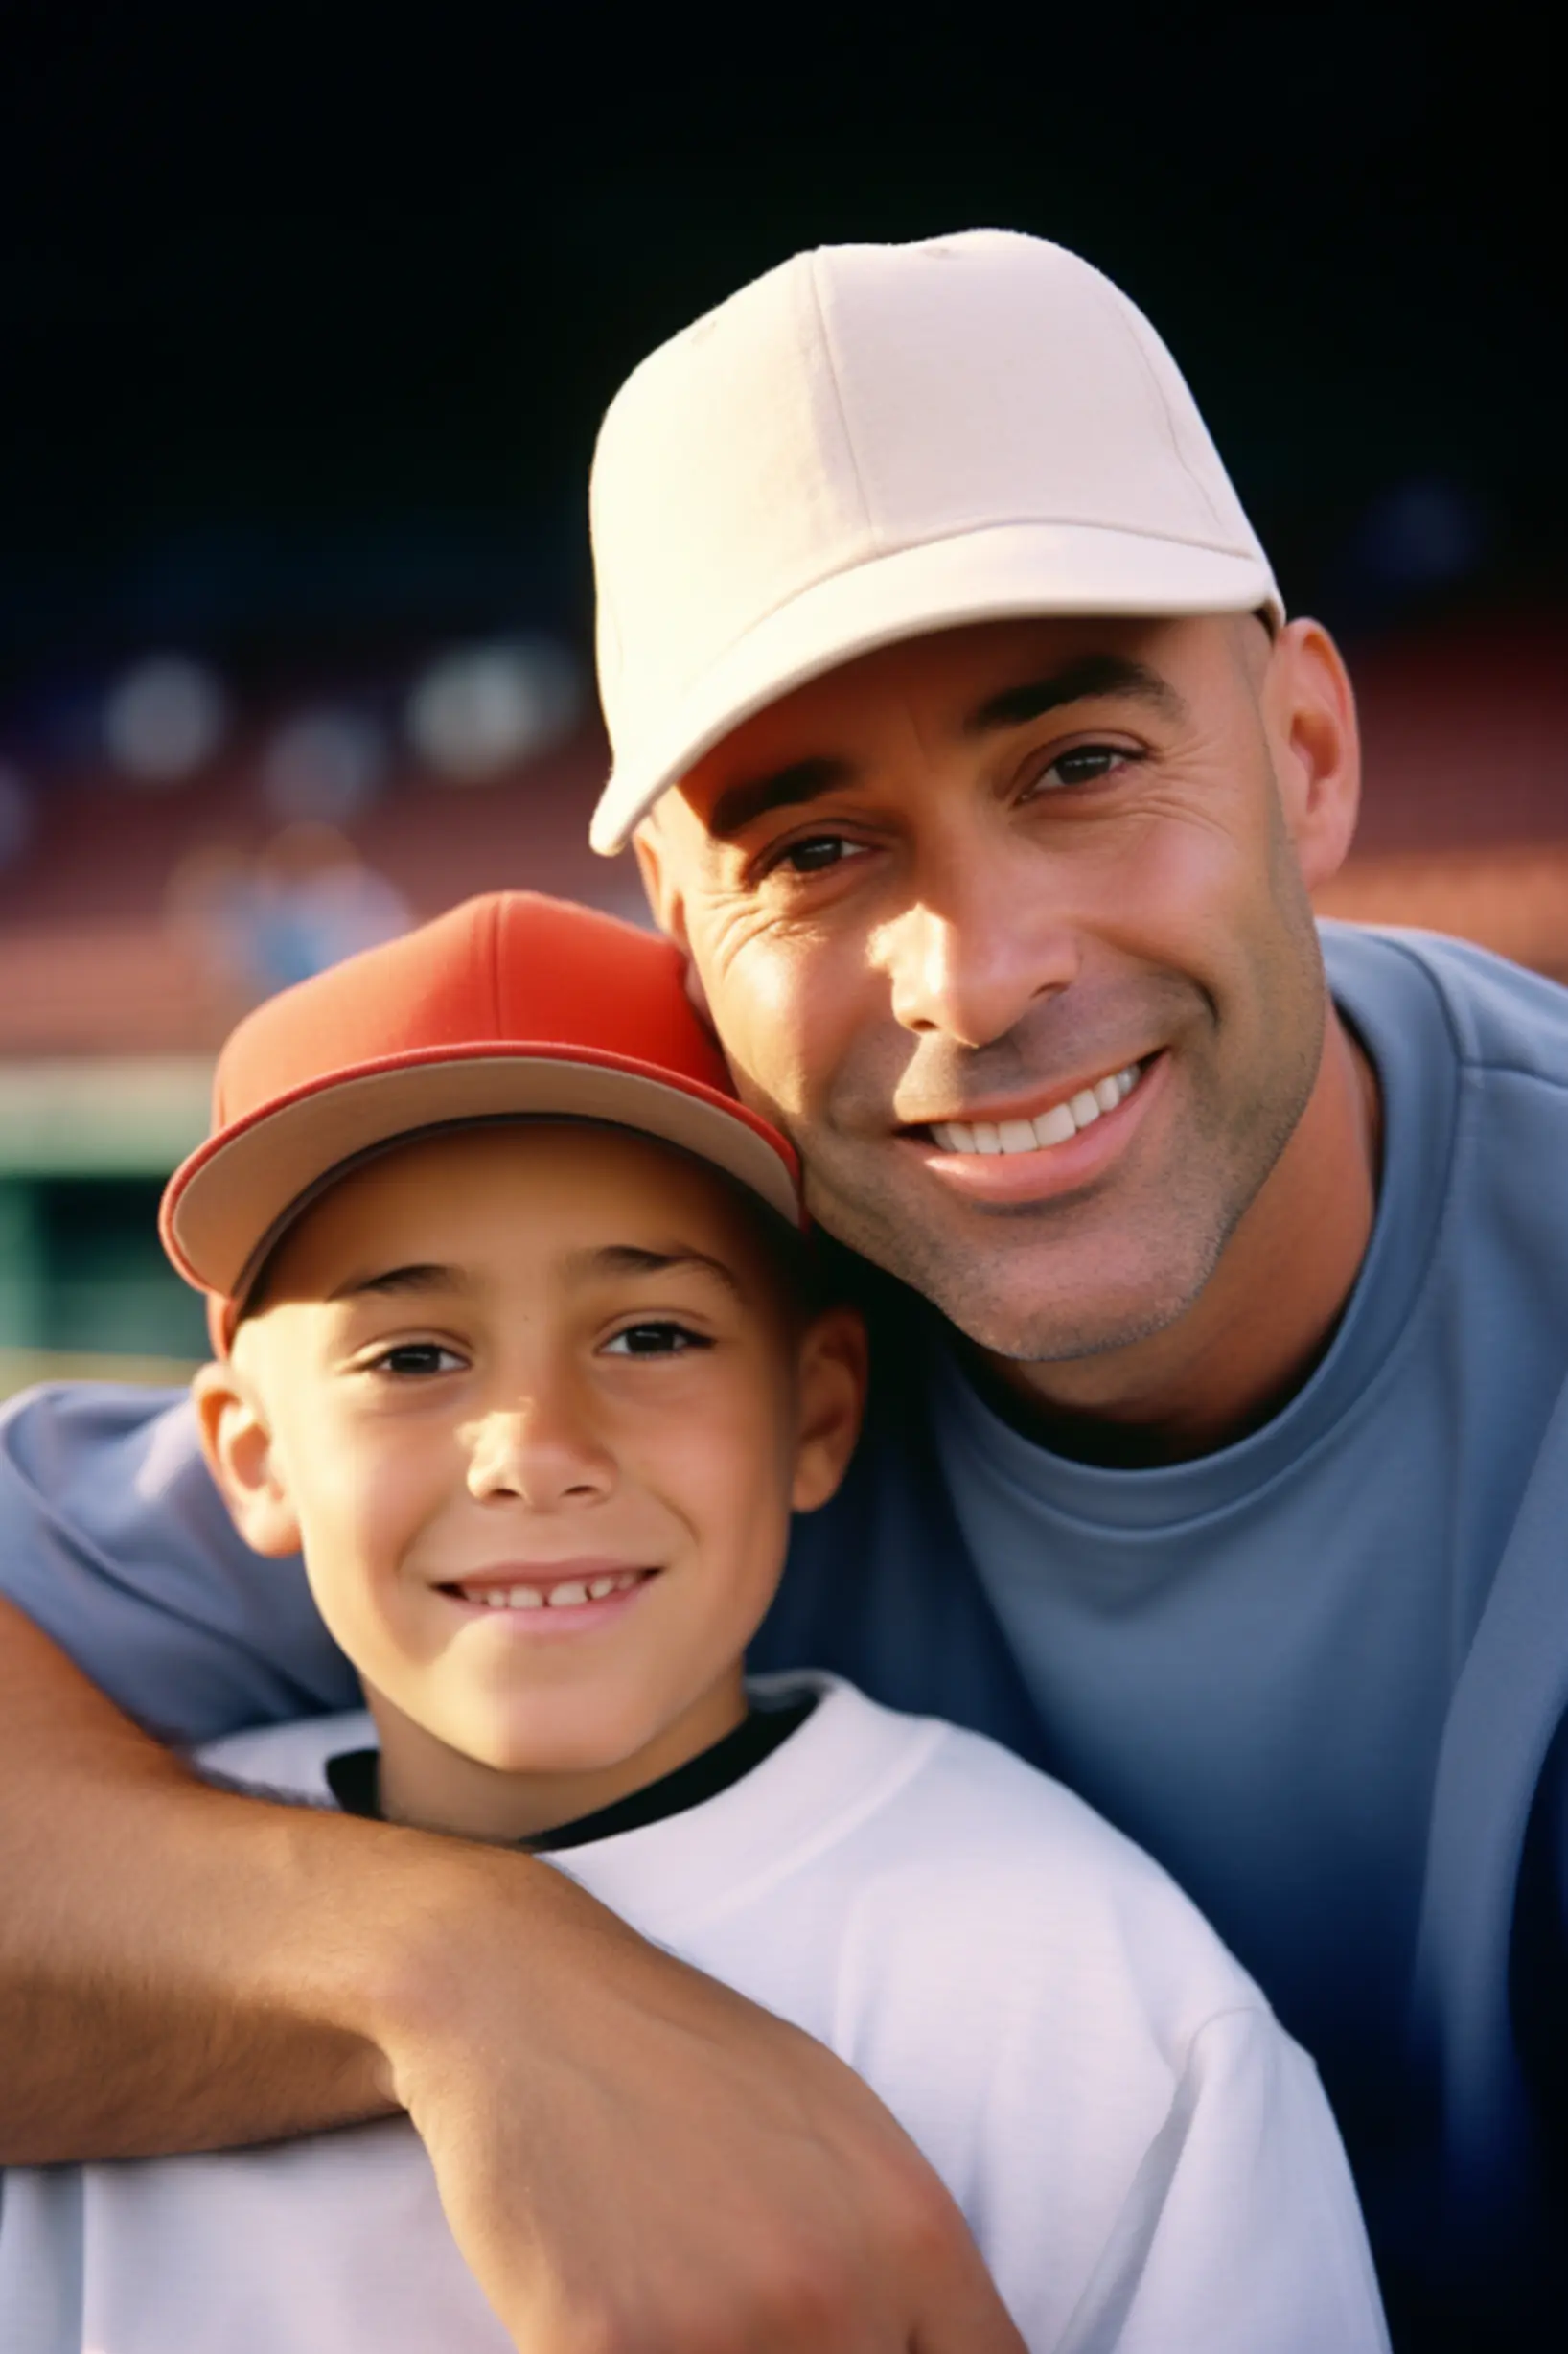 man with son at baseball game